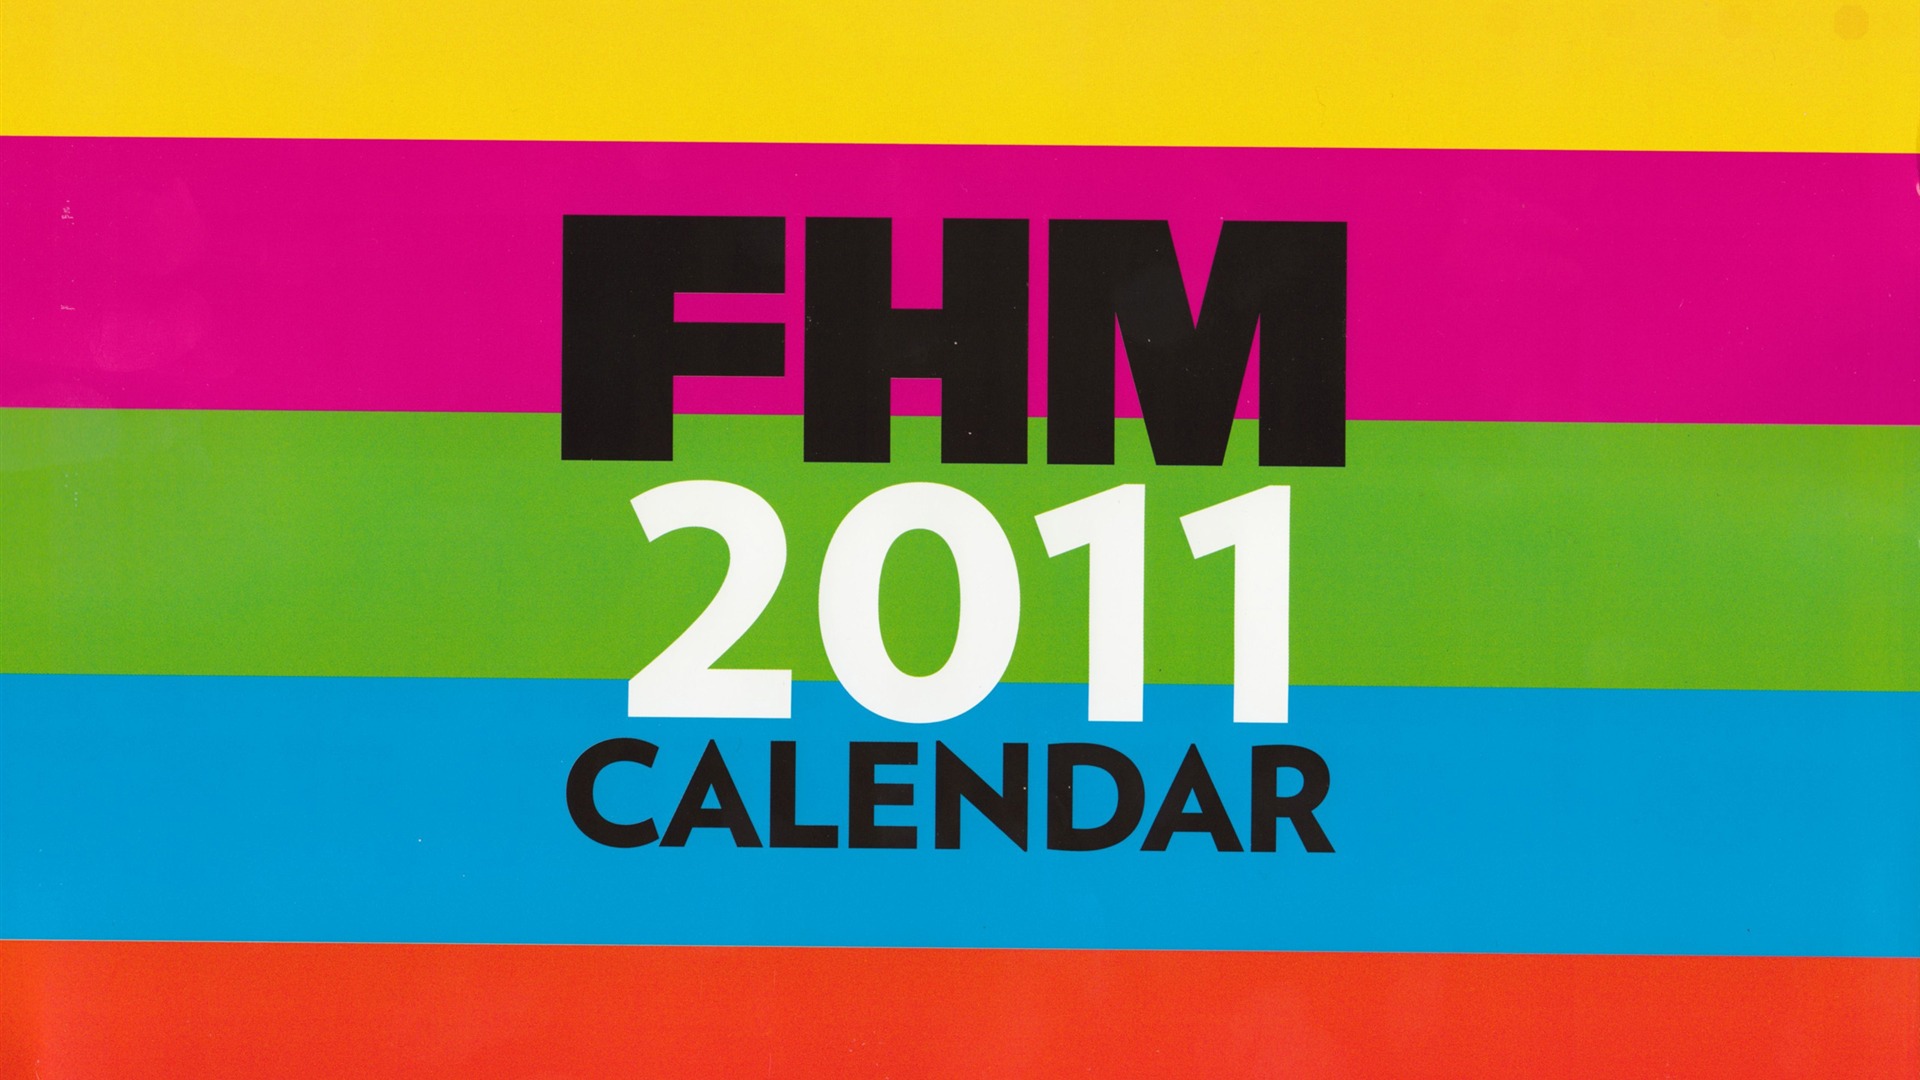 FHM Kalender 2011 Wallpaper Schauspielerin (2) #13 - 1920x1080